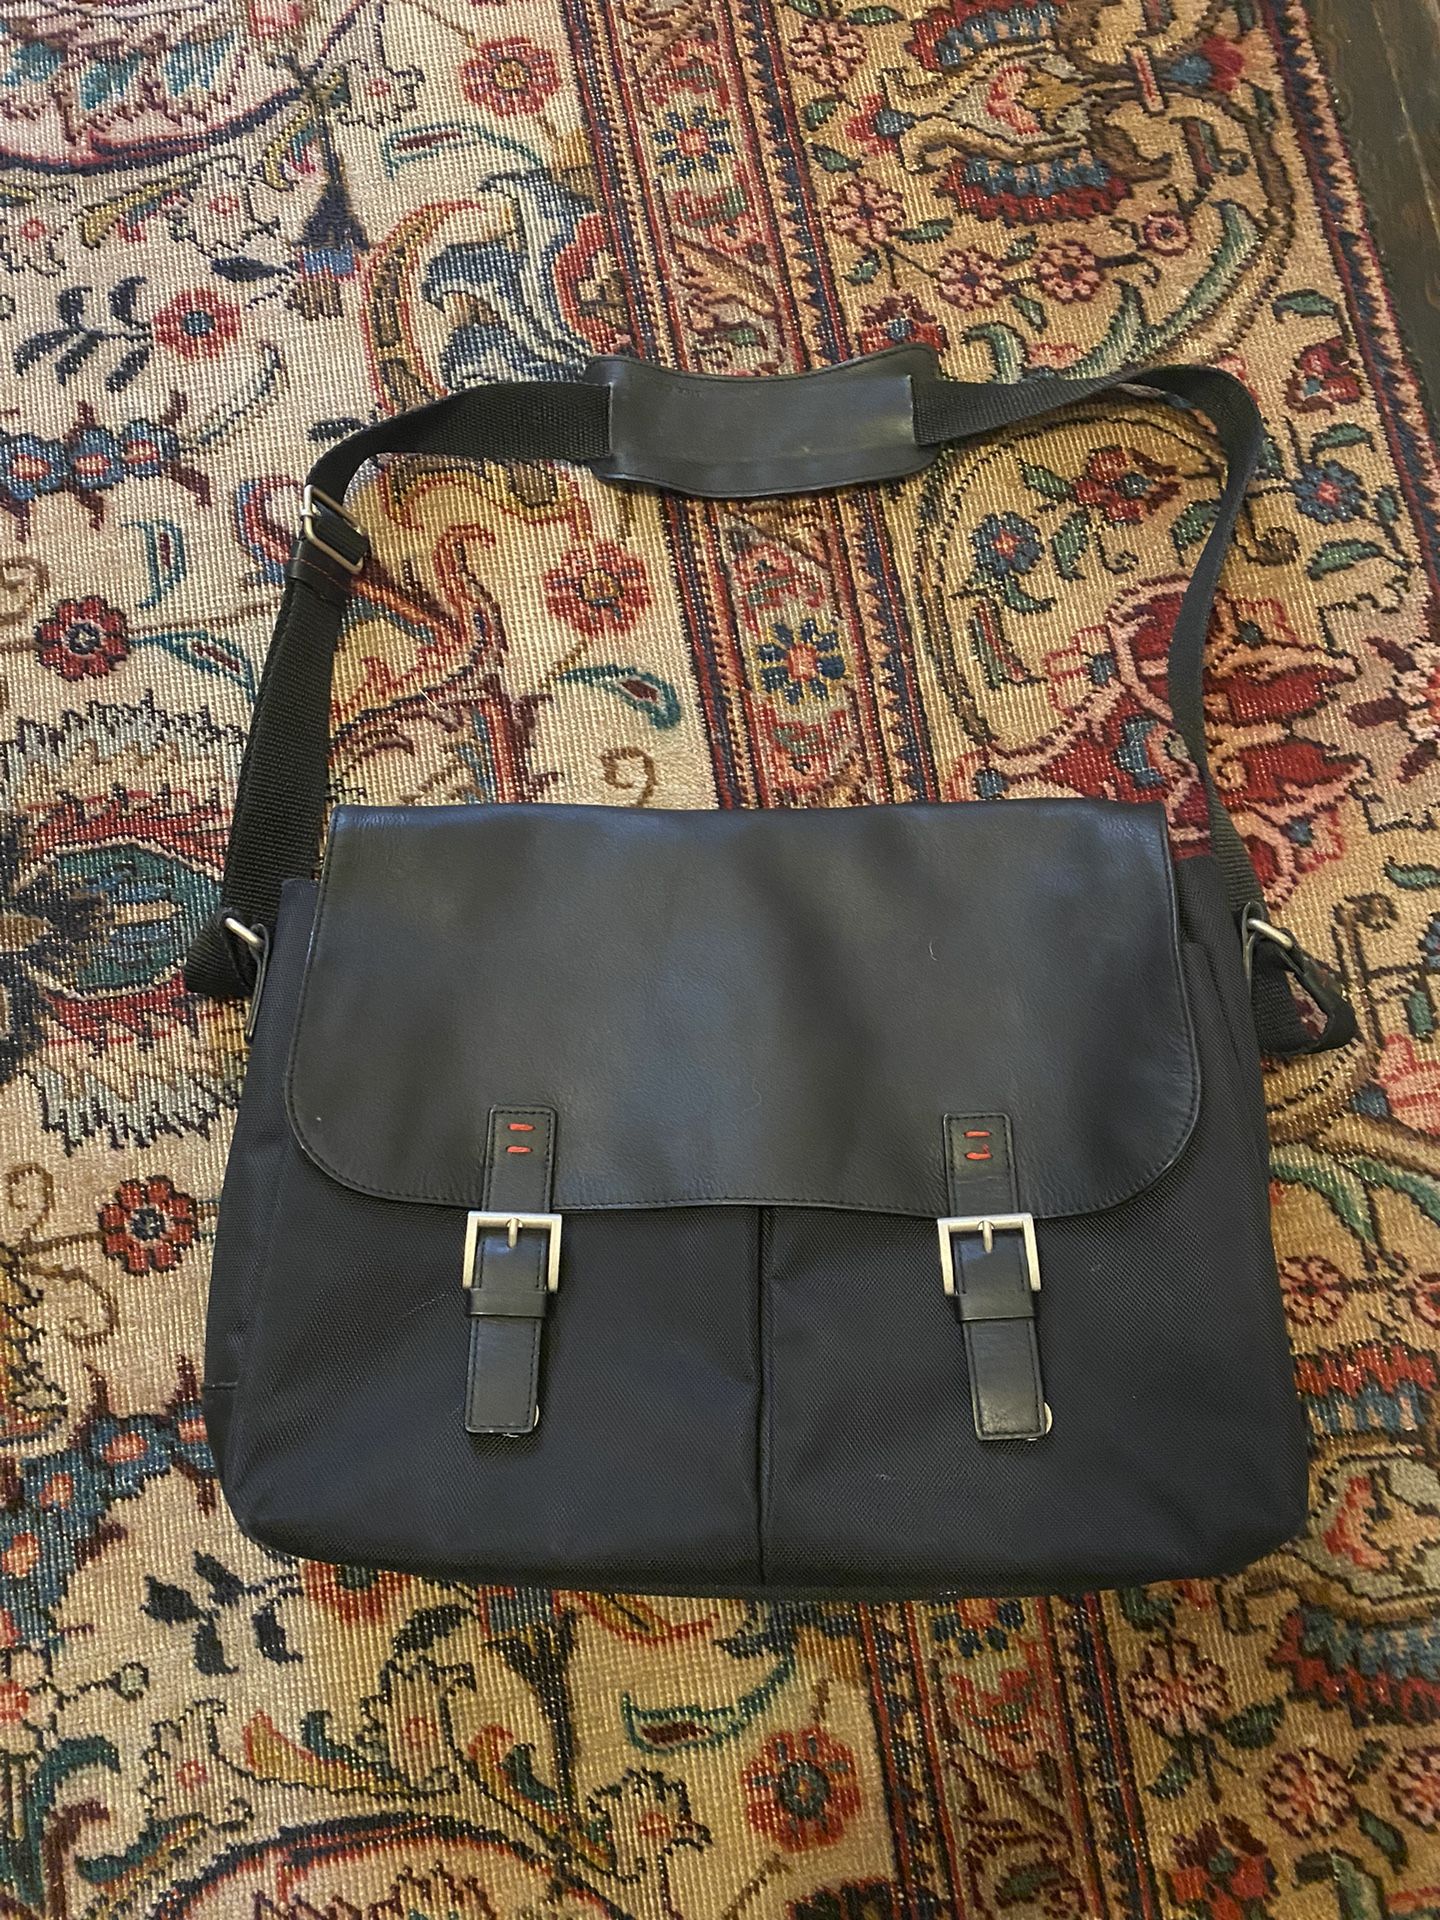 Messenger Bag / Computer Bag / Beiefcase